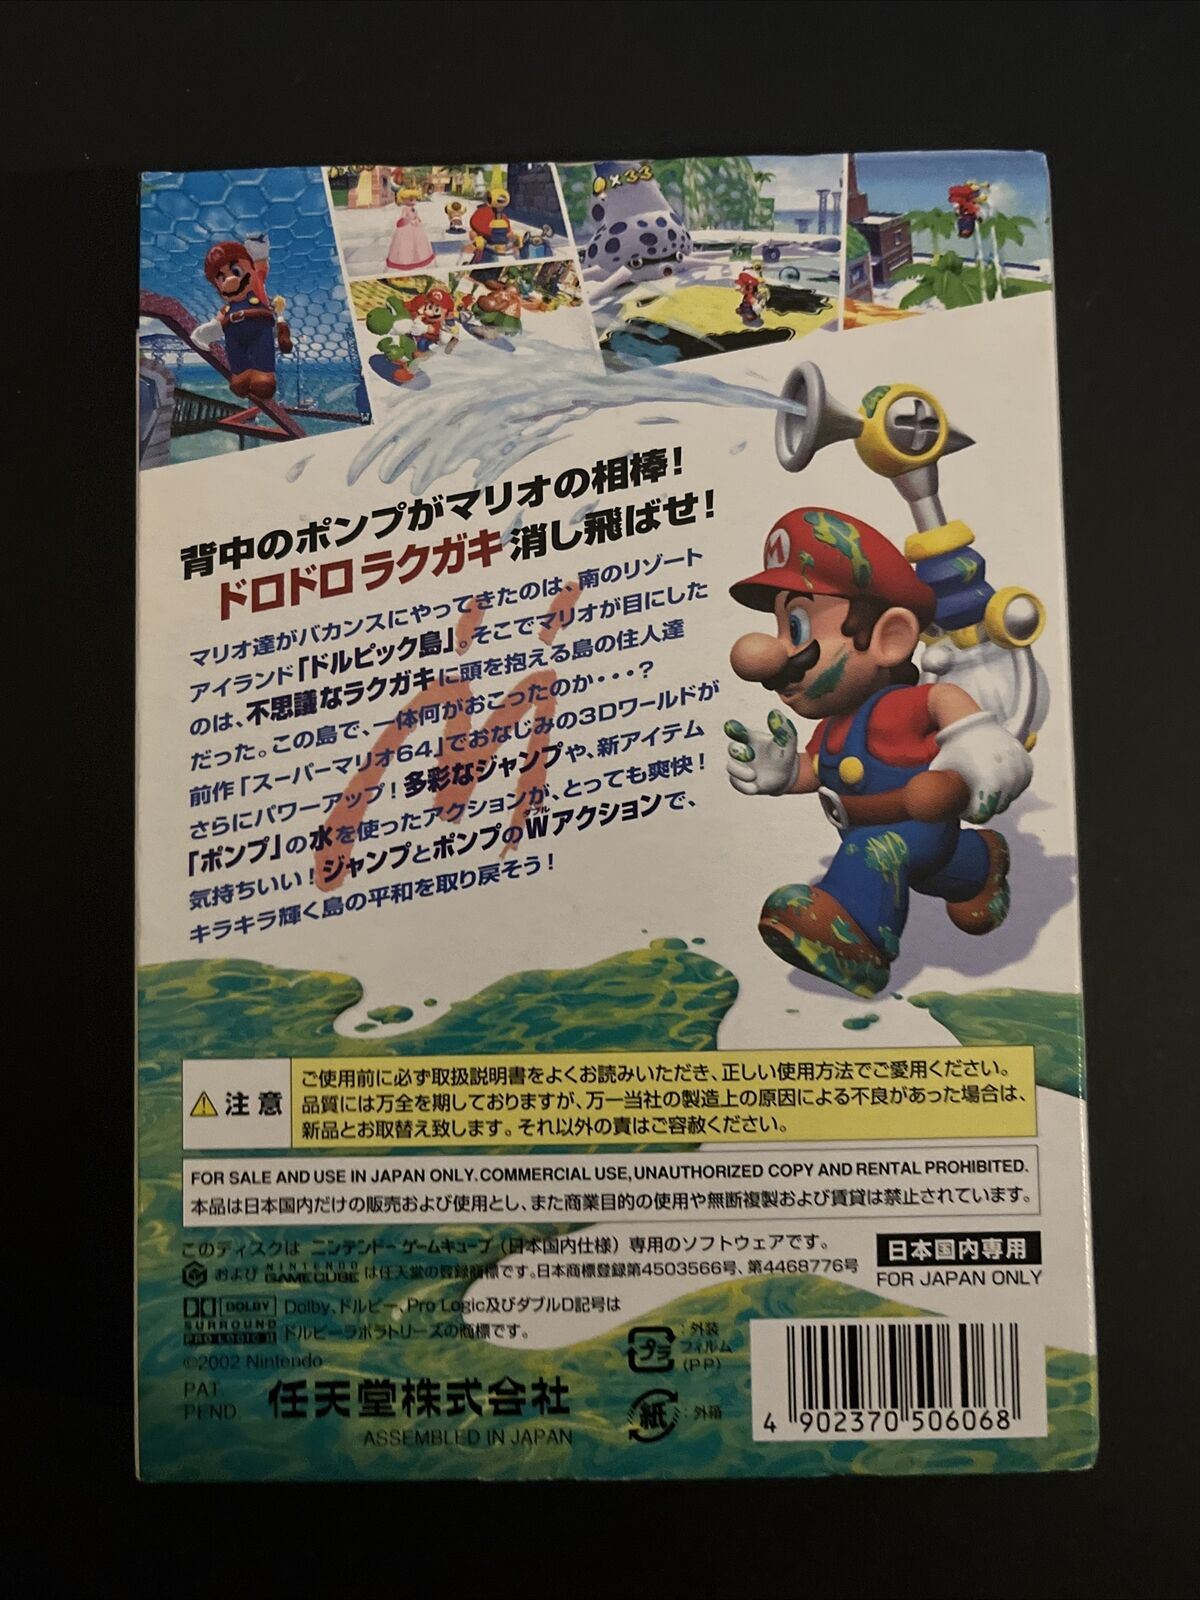 Super Mario Sunshine - Nintendo GameCube NTSC-J JAPAN Game Complete with Manual